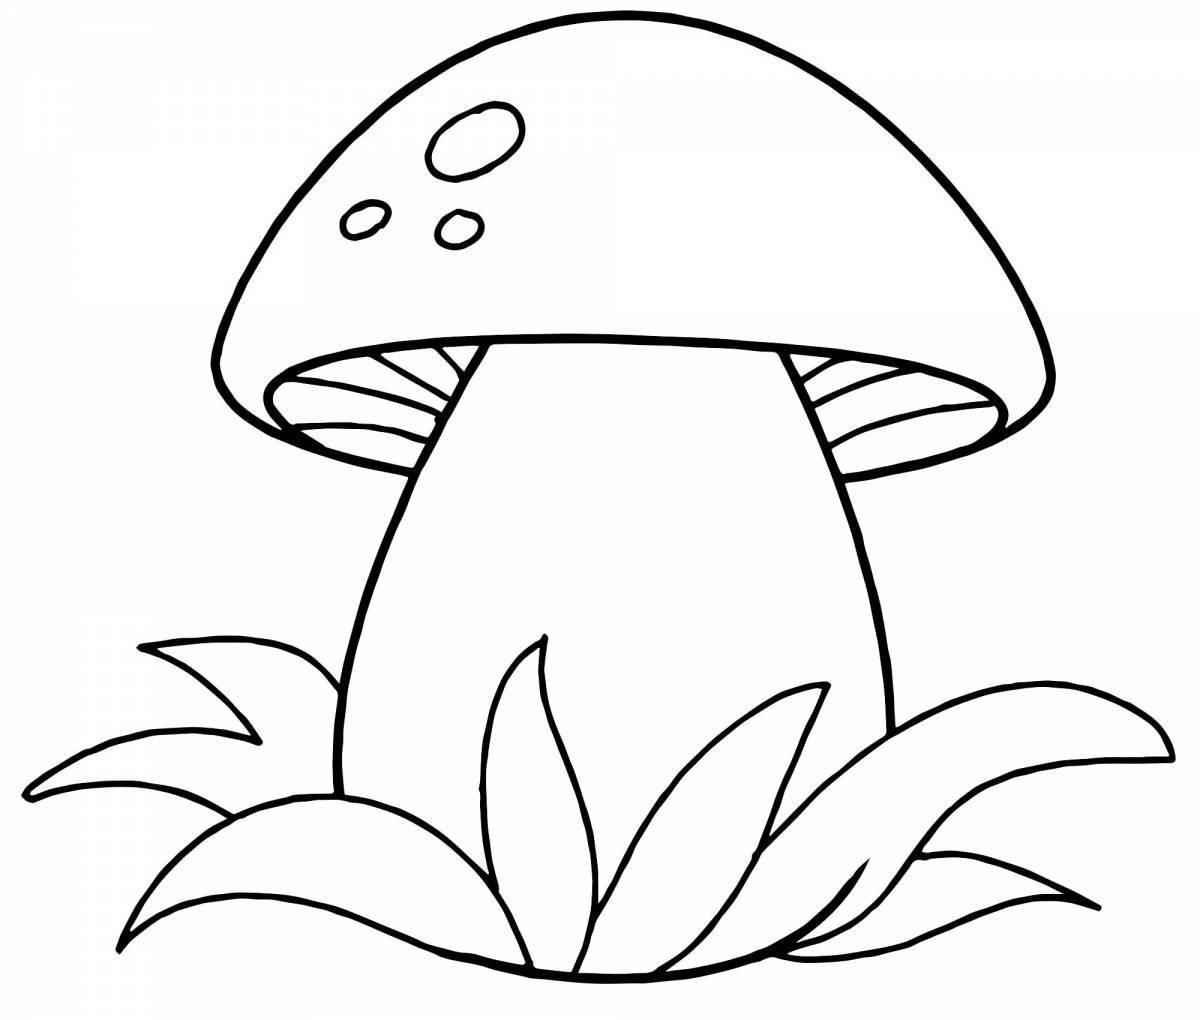 Coloring page amazing boletus mushrooms